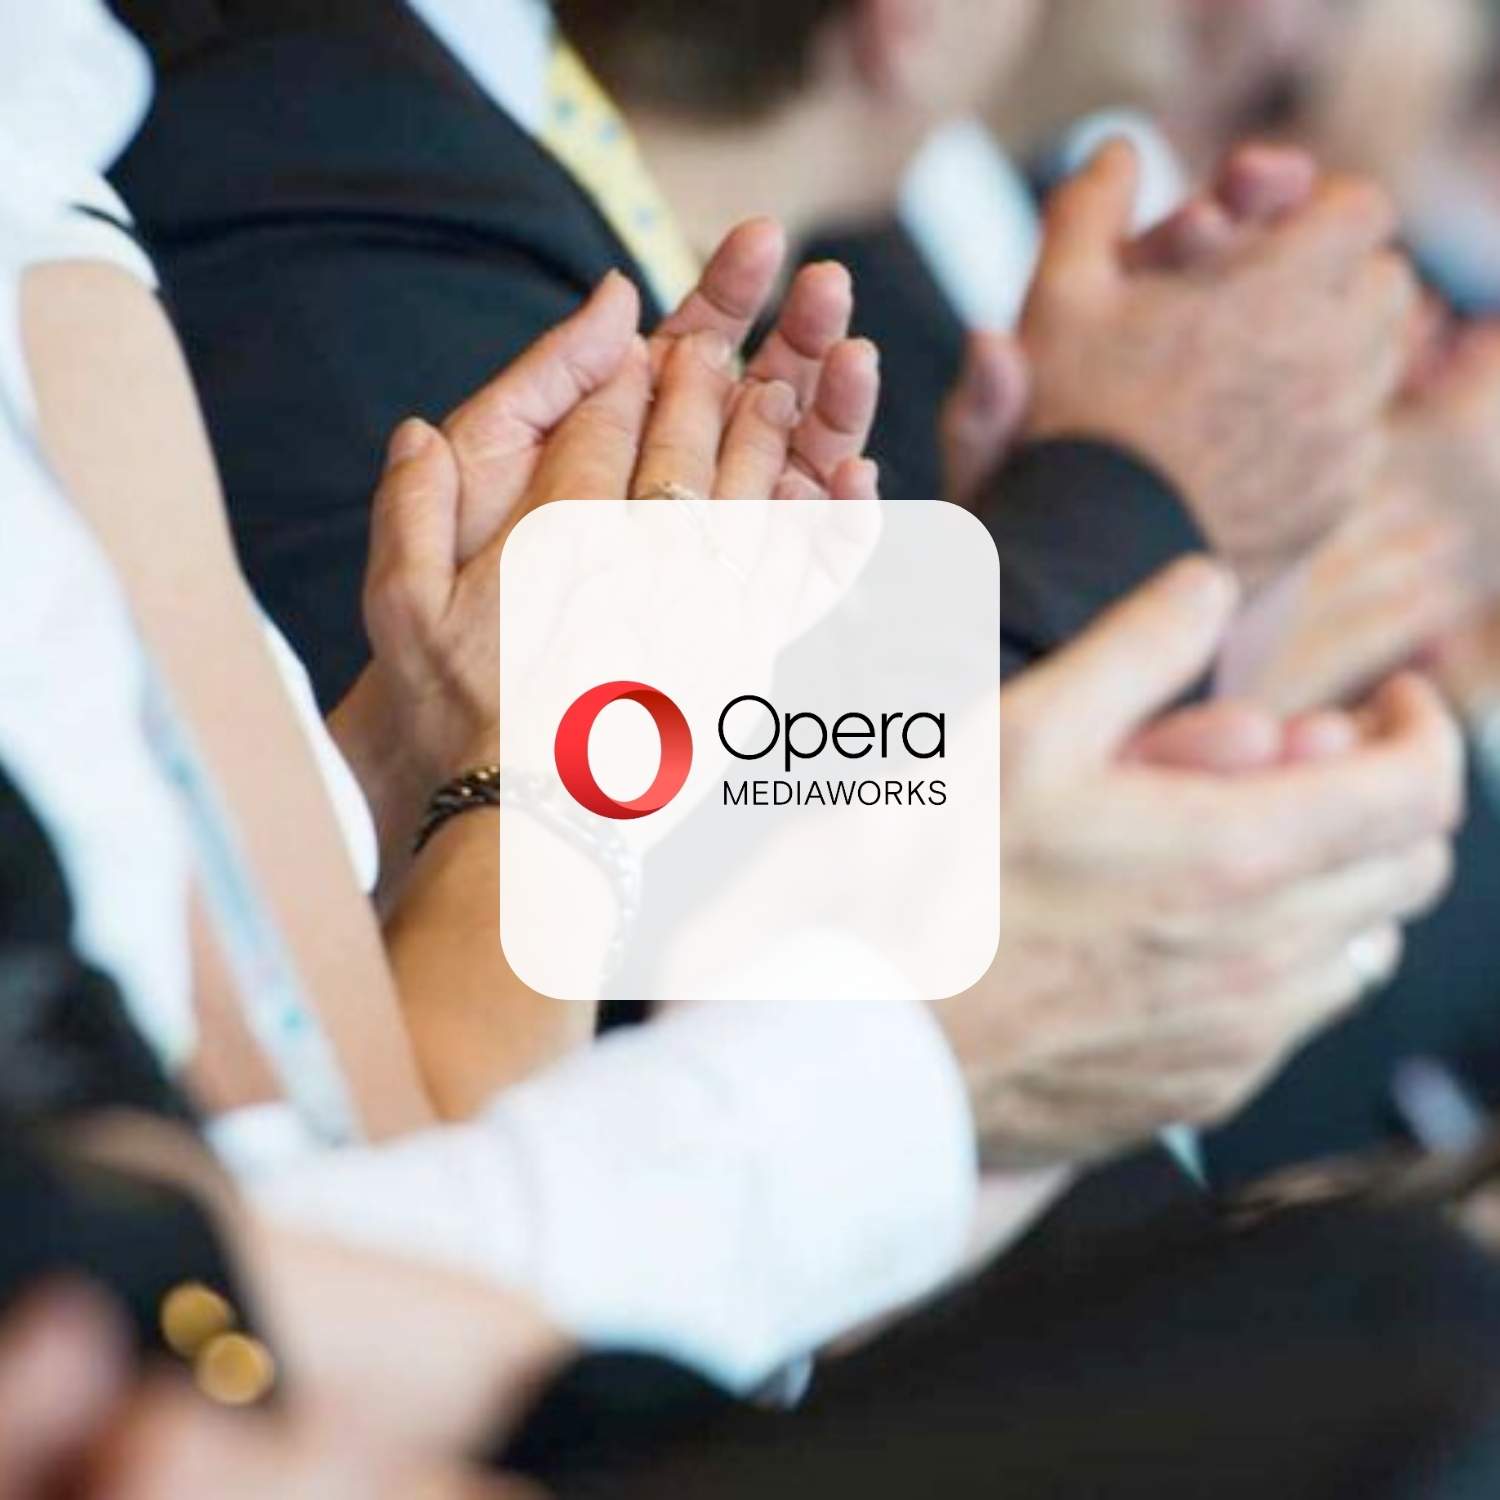 Opera MediaWorks